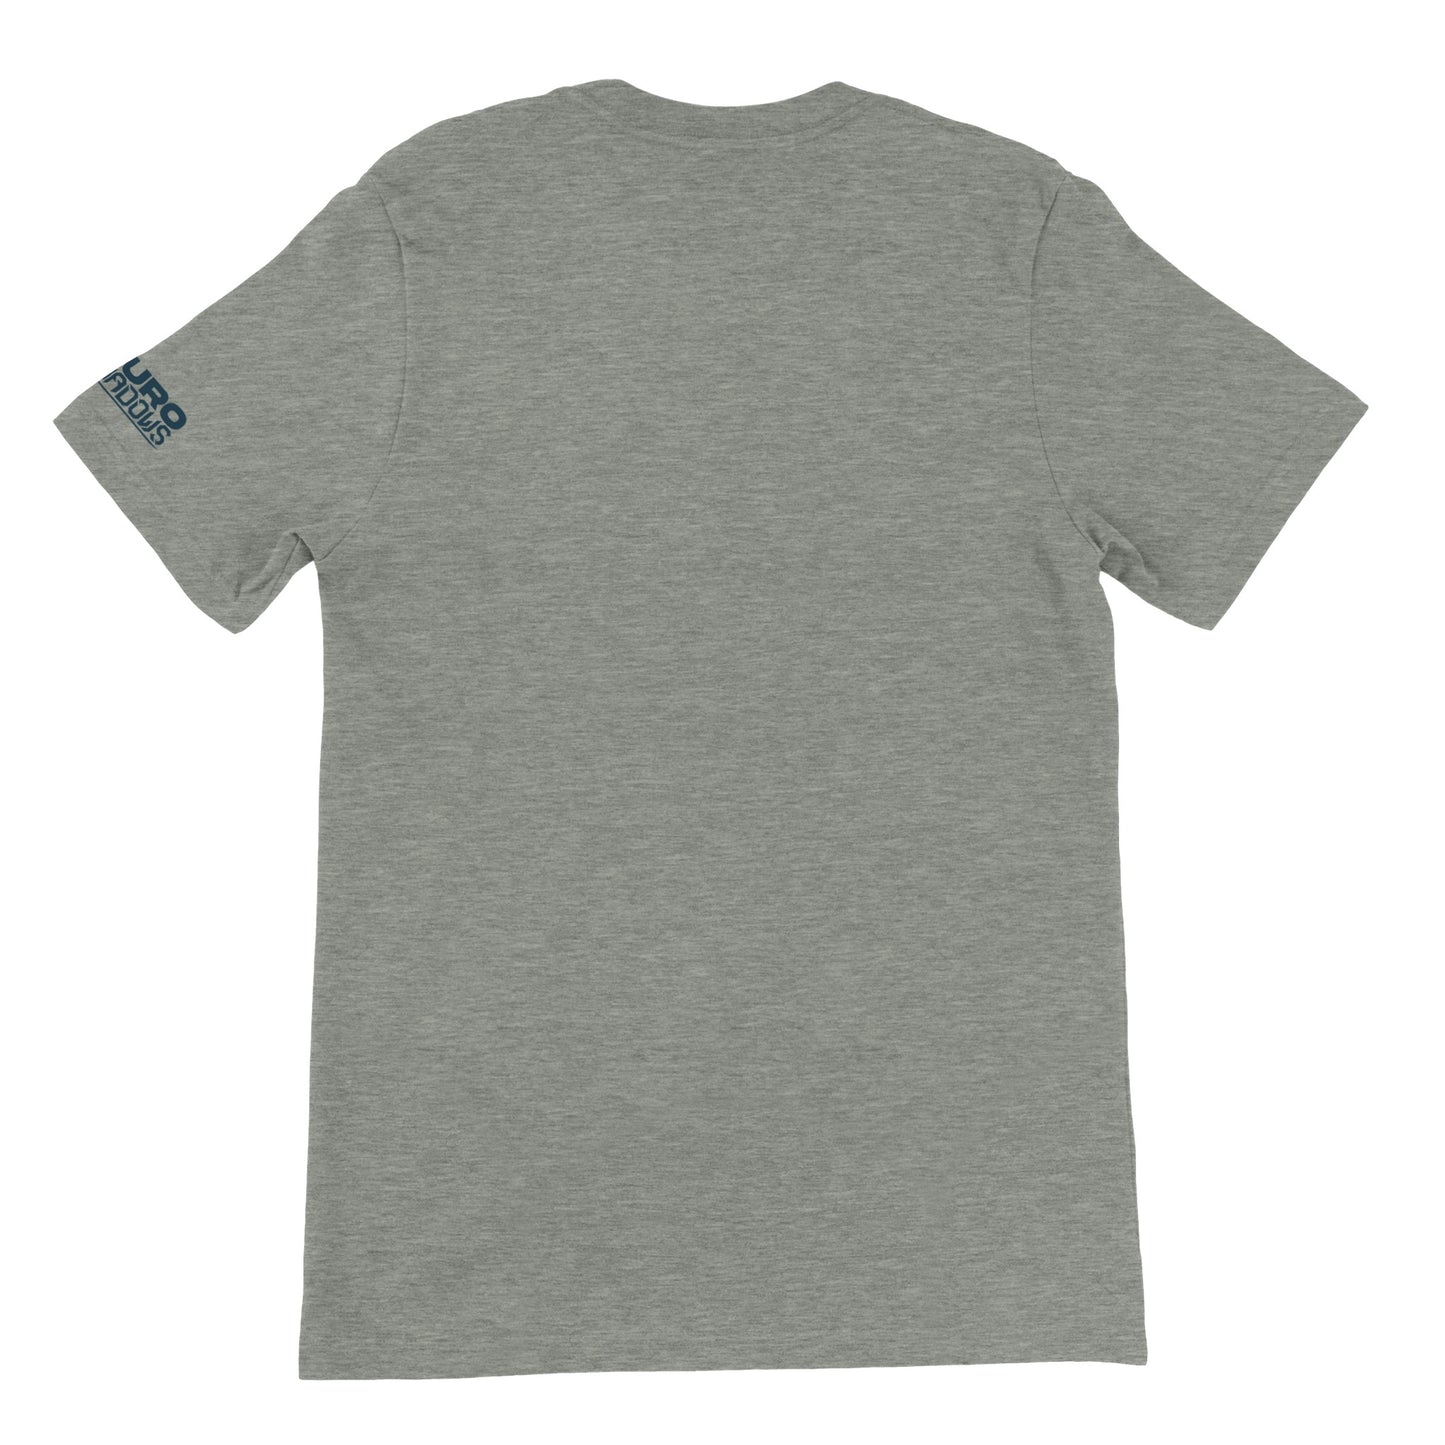 KURO SHADOWS "Yoga Fire" Premium Unisex Crewneck T-shirt